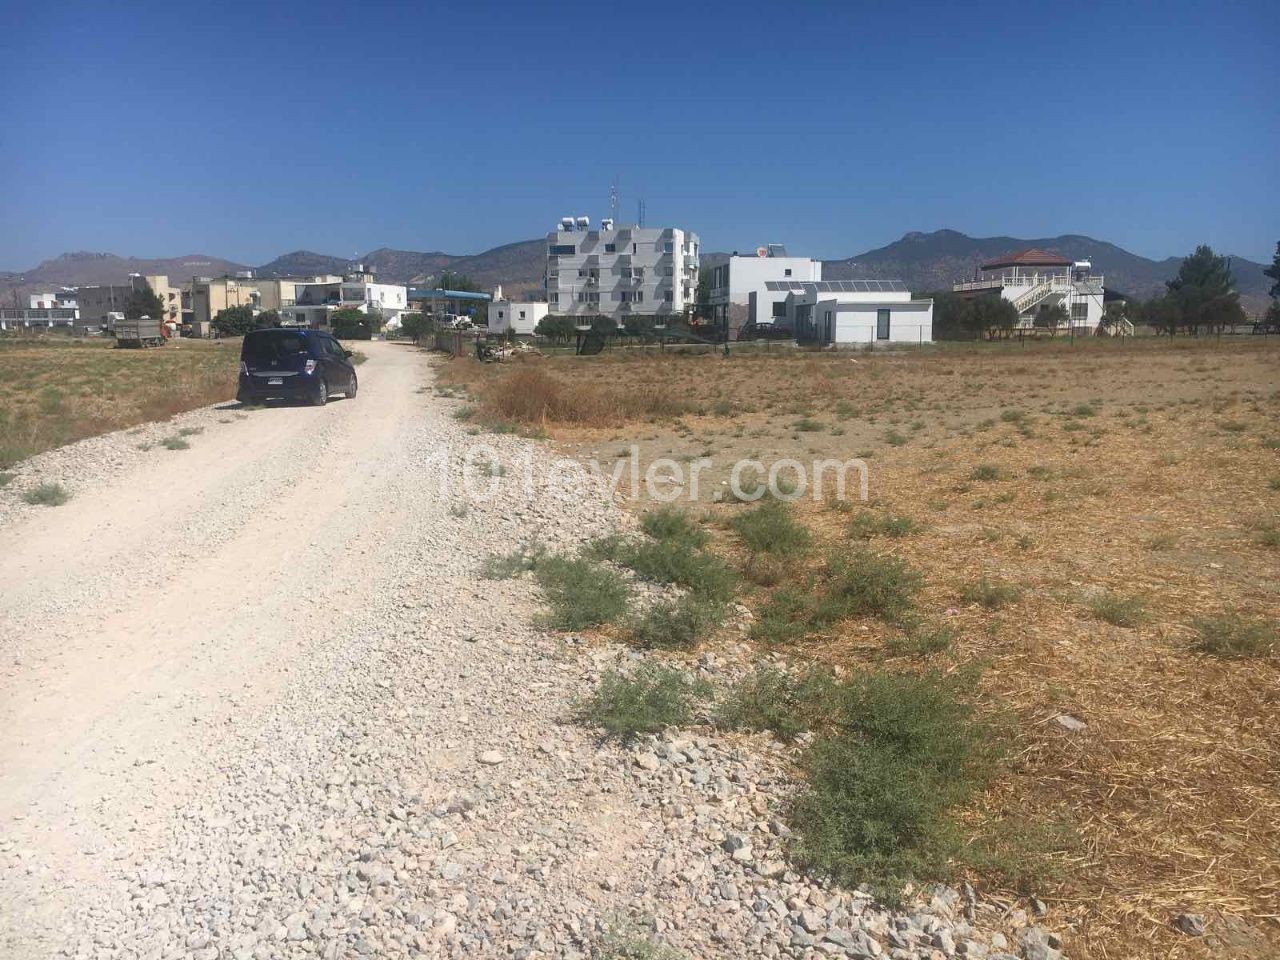 Grundstück zum Verkauf in Nikosia Cihangirde 8 acres 2 evlek 1800a2, Acre 20.000 stg ** 